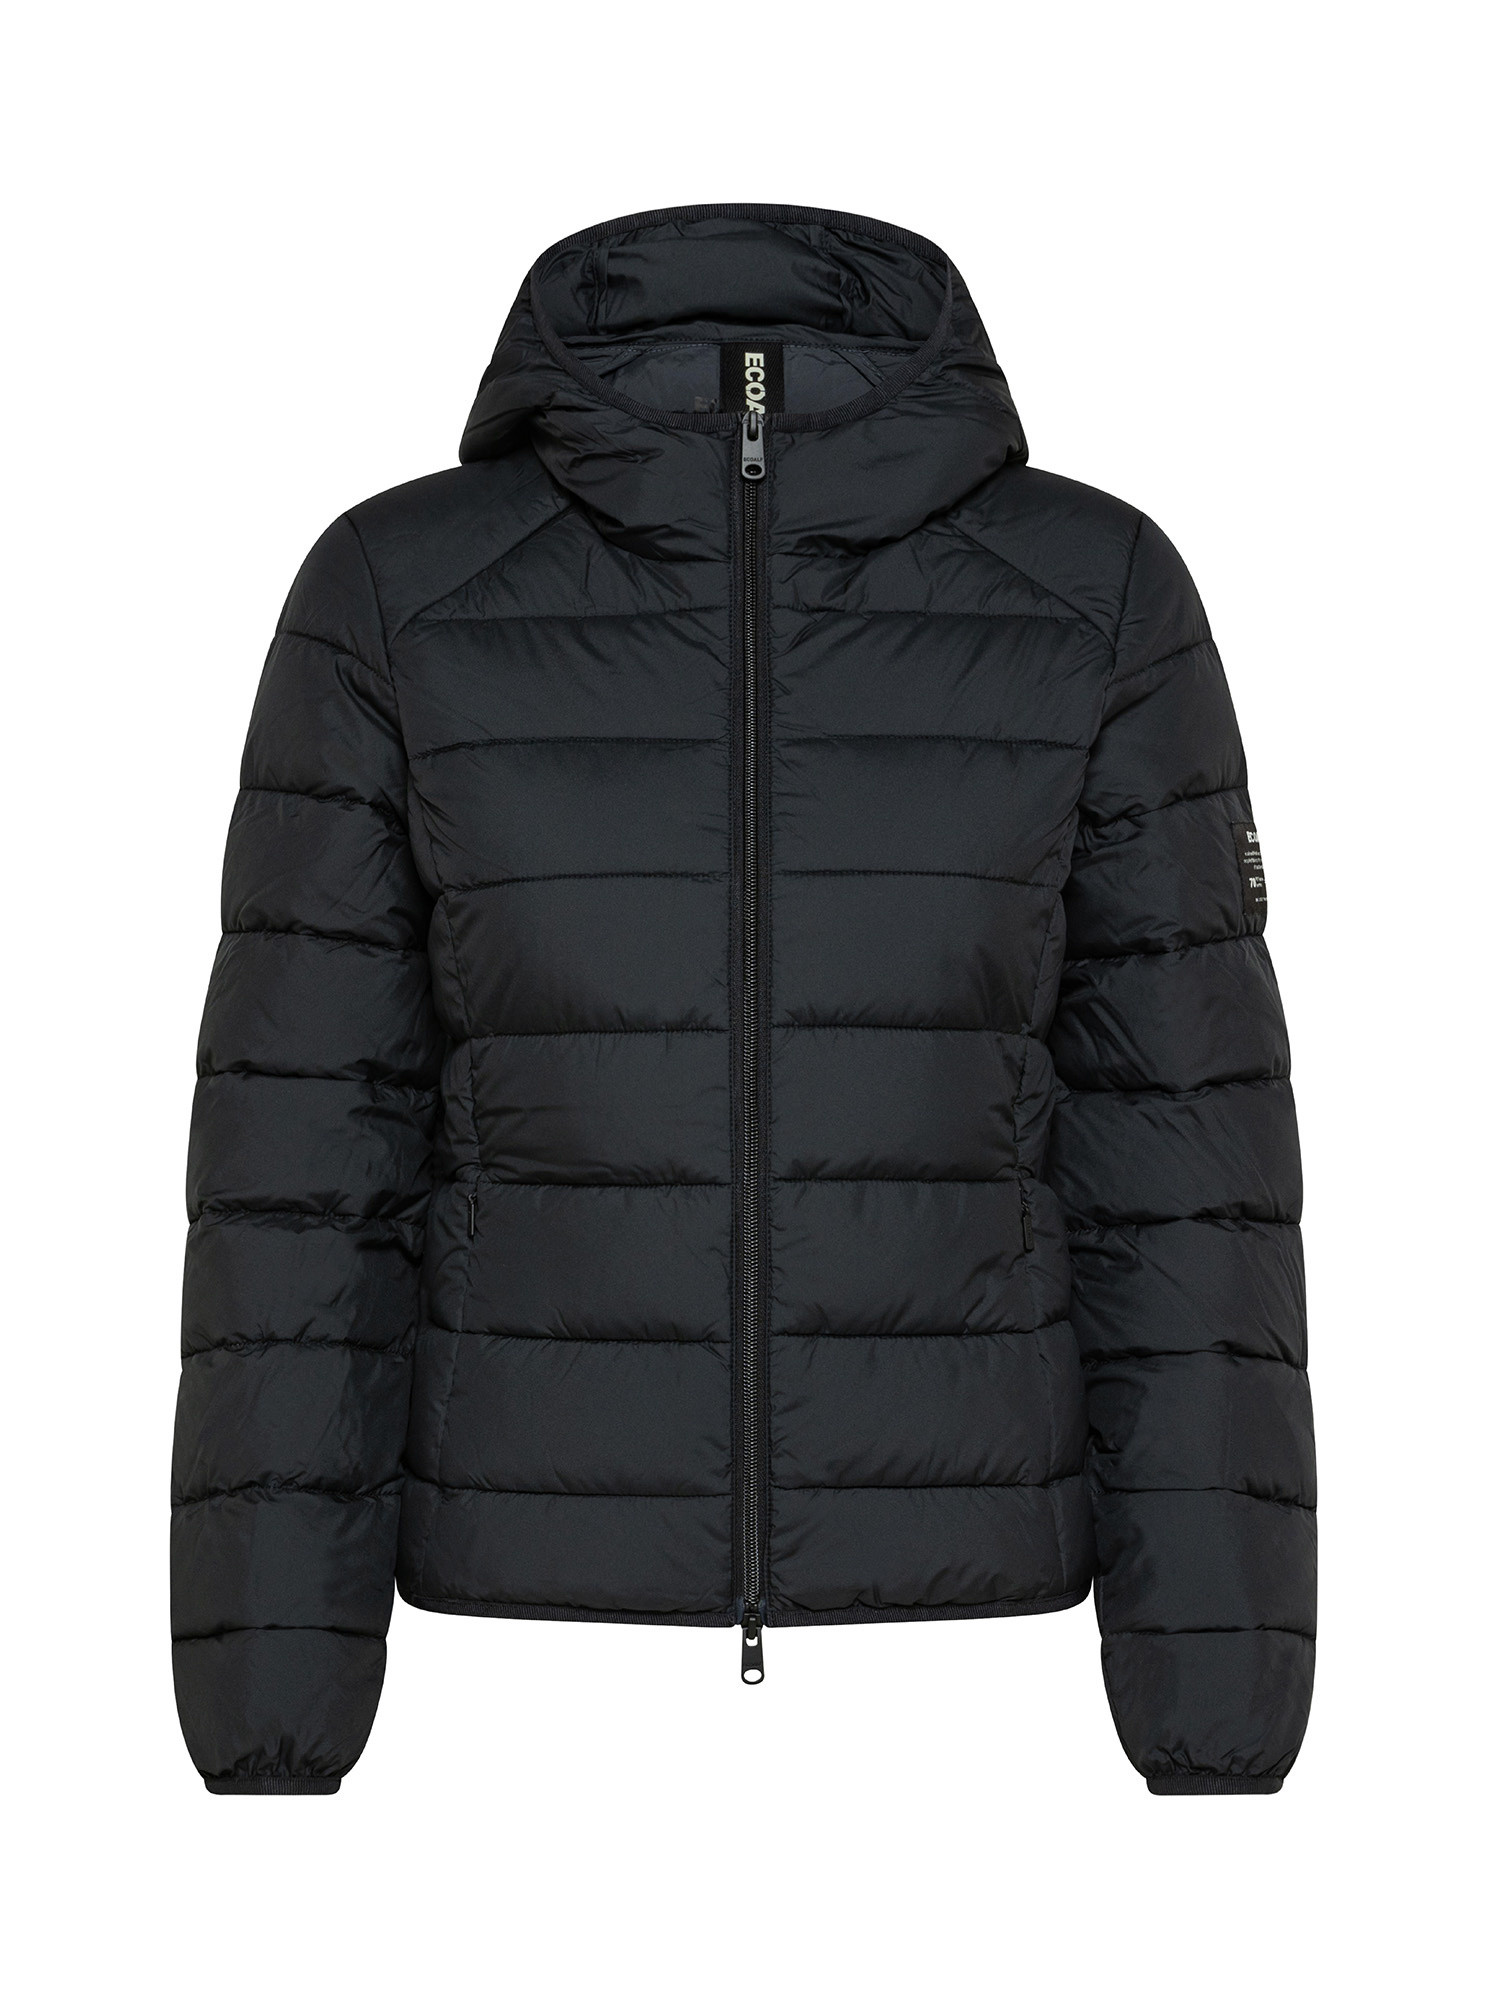 Ecoalf - Waterproof Asp down jacket with logo, Black, large image number 0